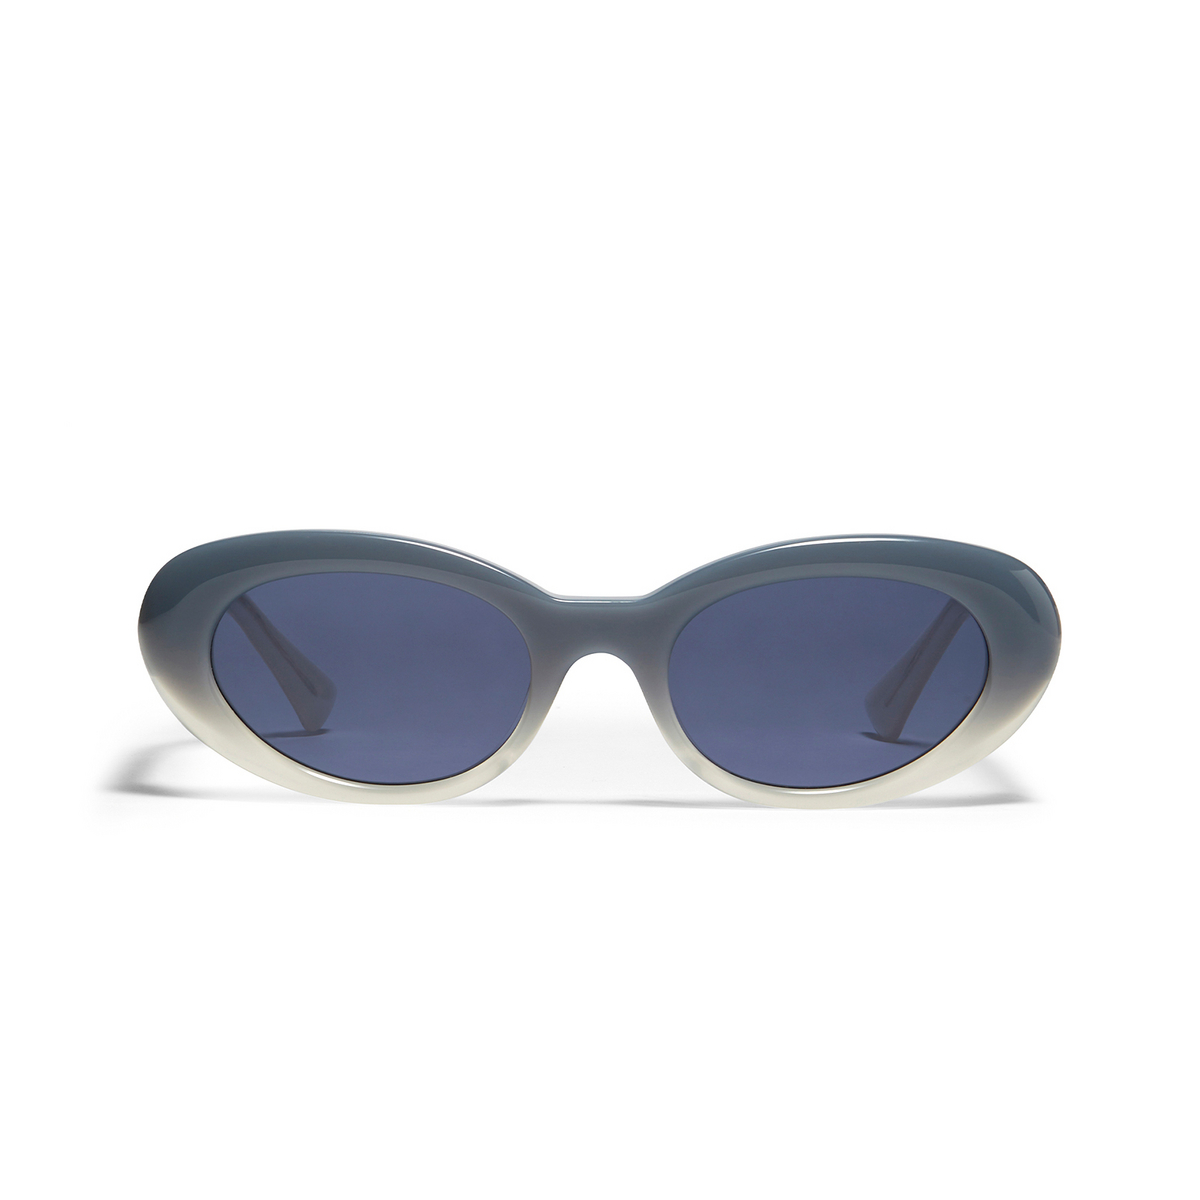 Gentle Monster® Cat-eye Sunglasses: Le color Blue IBG1 - front view.